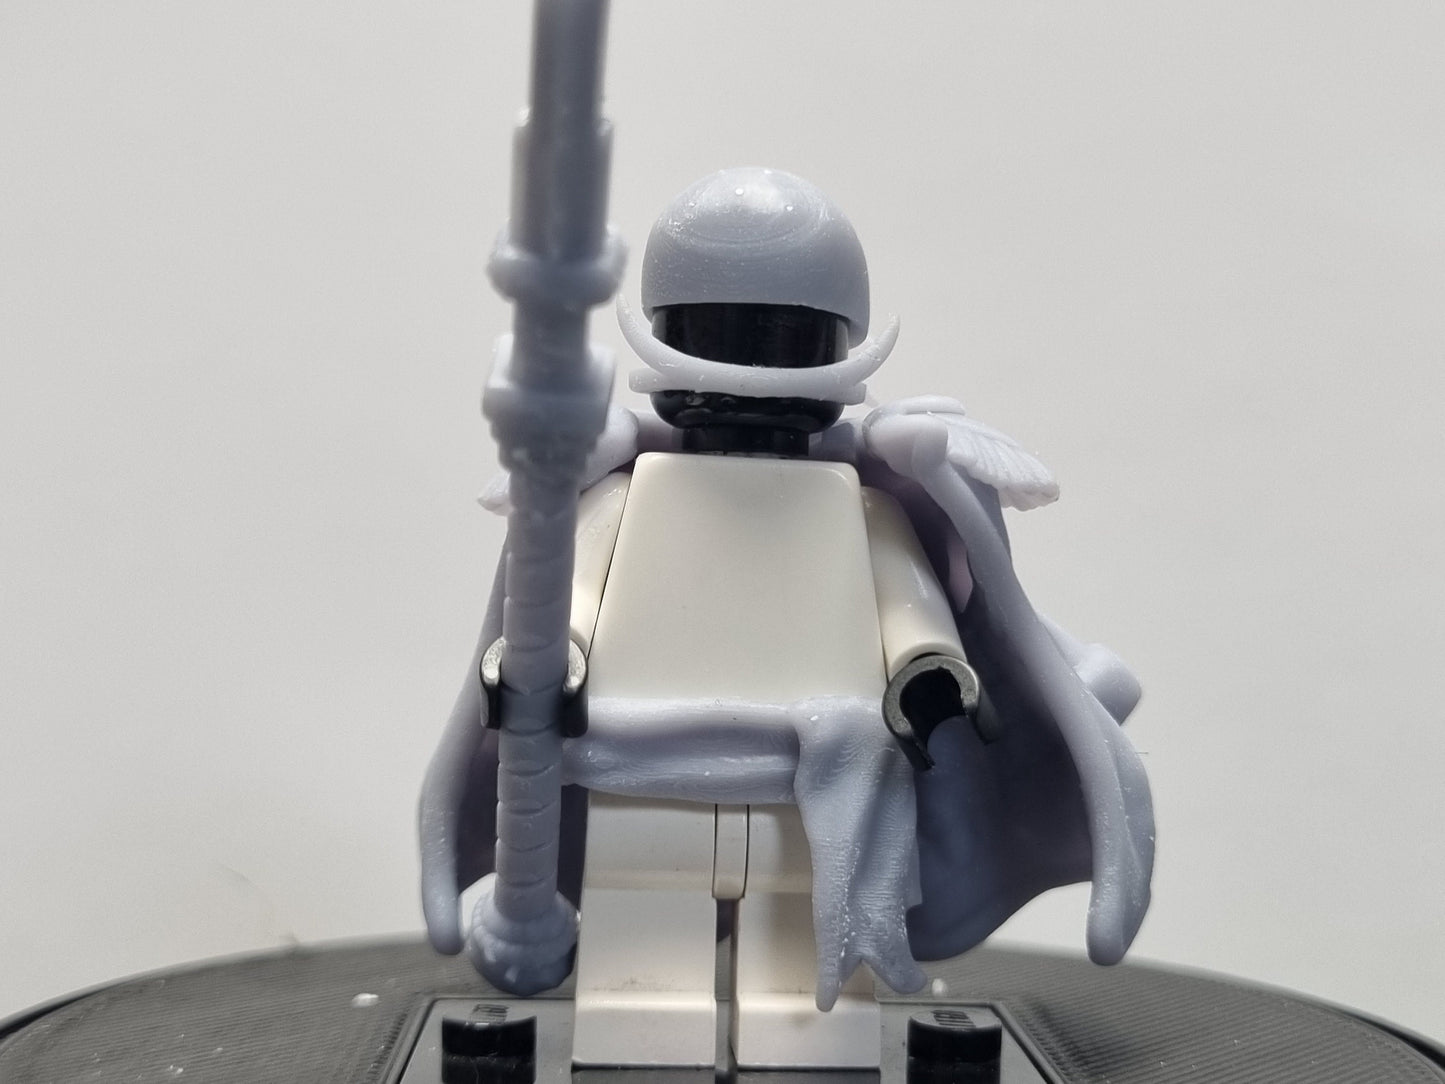 Building toy custom 3D printed mustage man set!